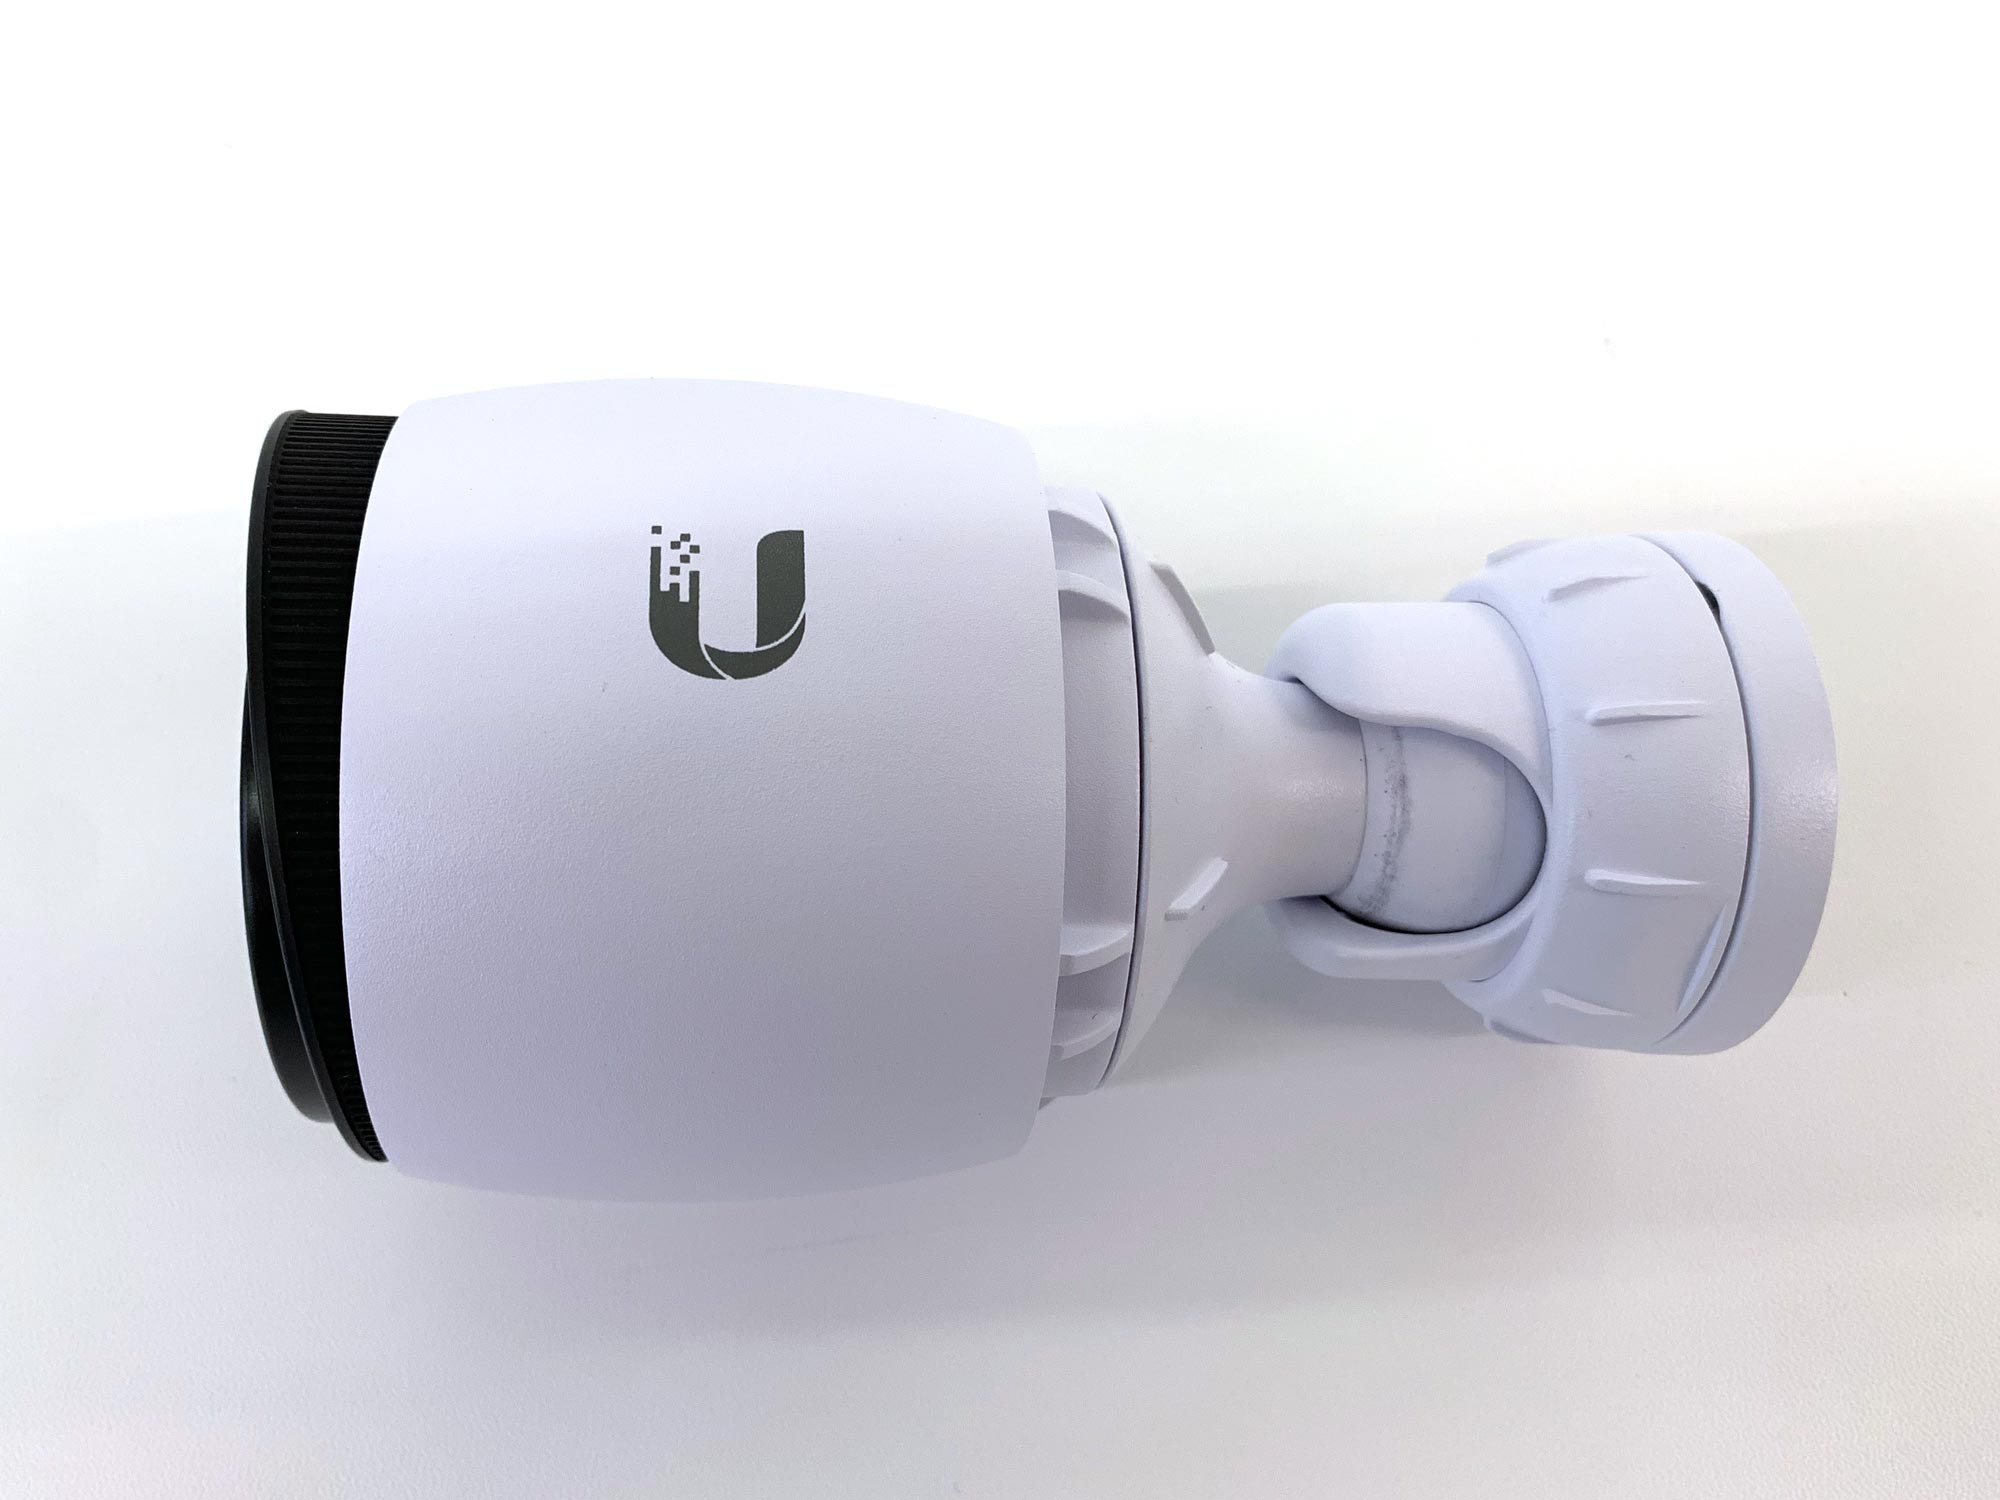 UVC-G3-PRO - UniFi Protect G3 PRO Camera